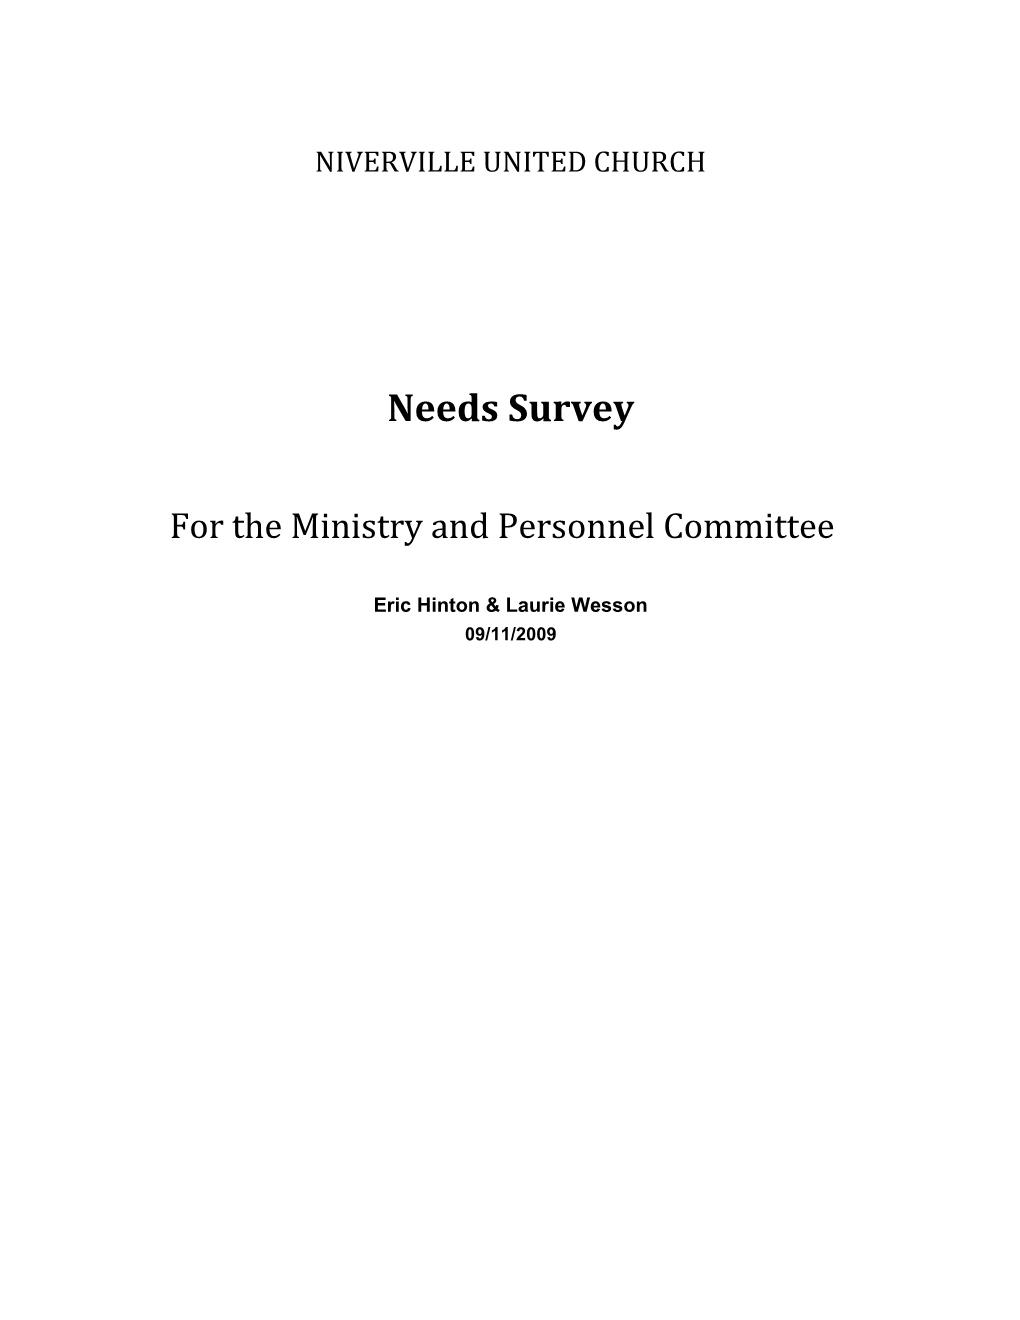 Niverville United Needs Survey Summary Document 2009